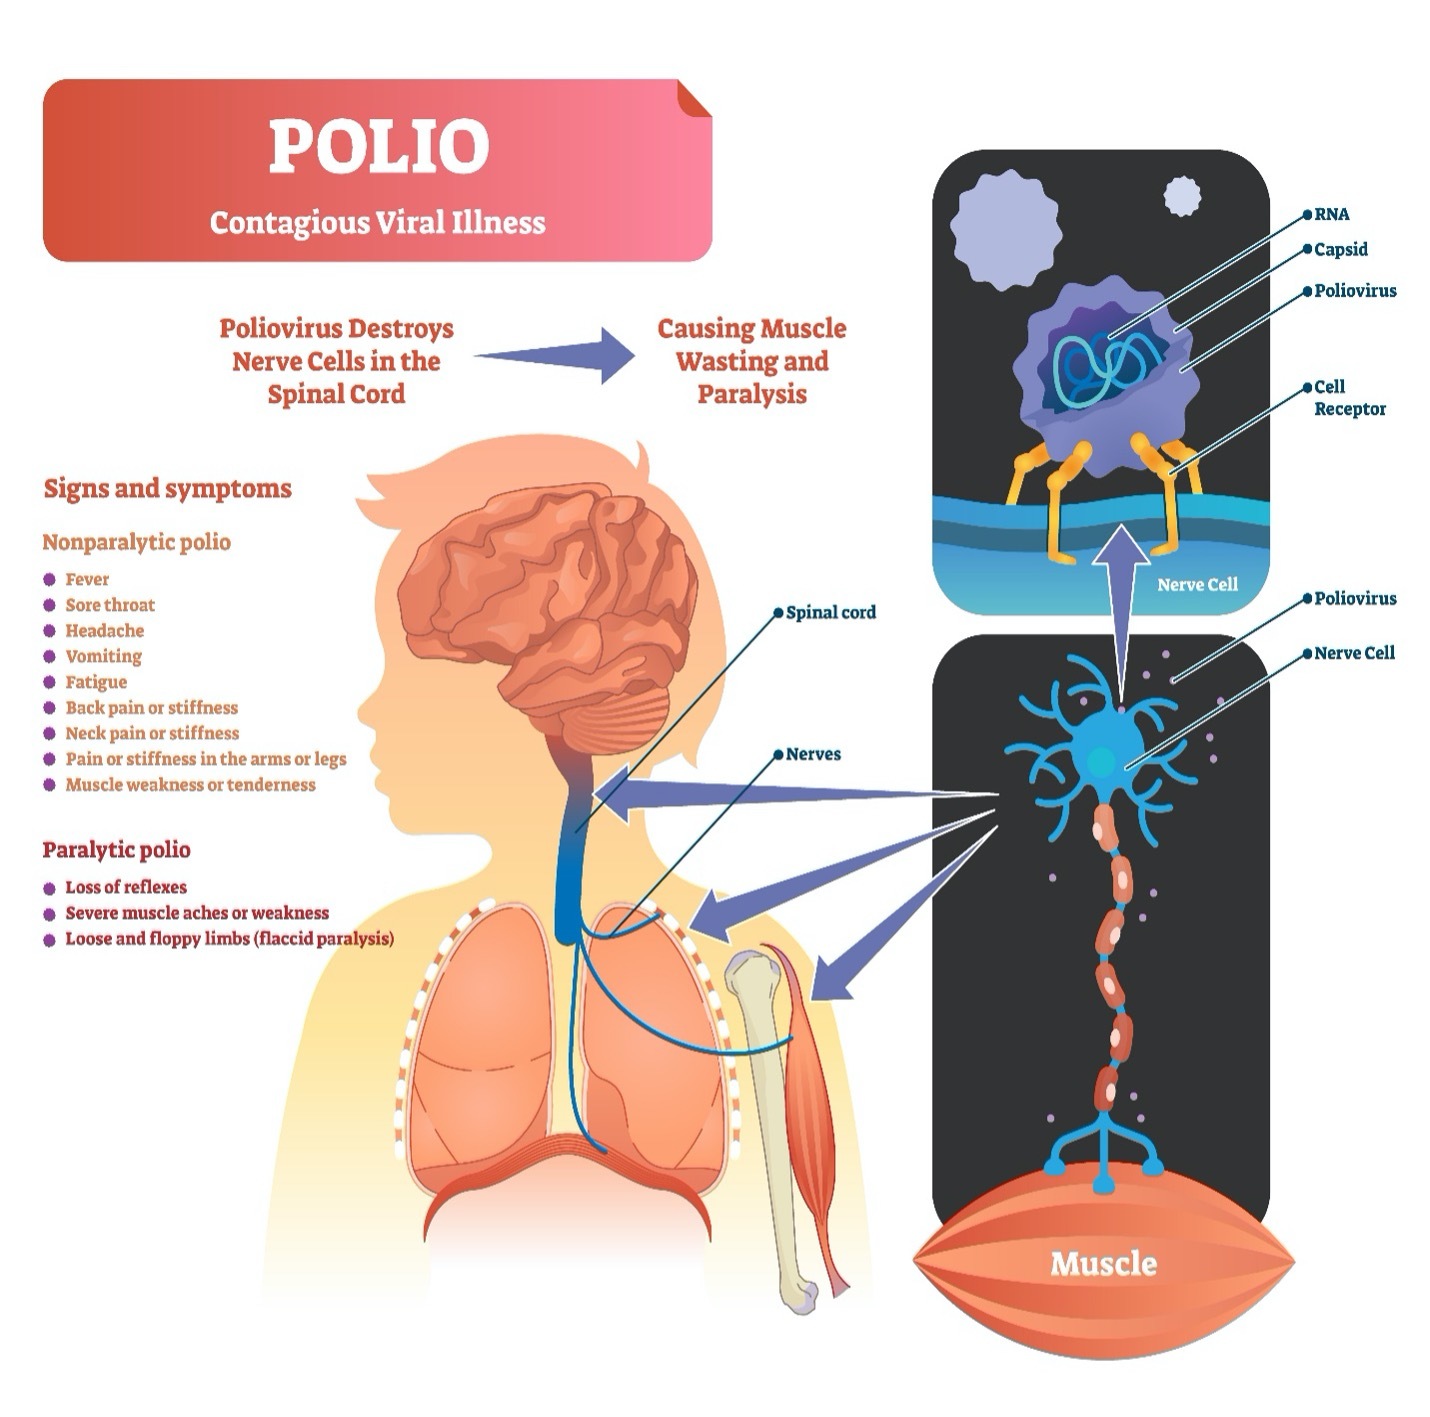 Polio Contagious Viral Illness diagram